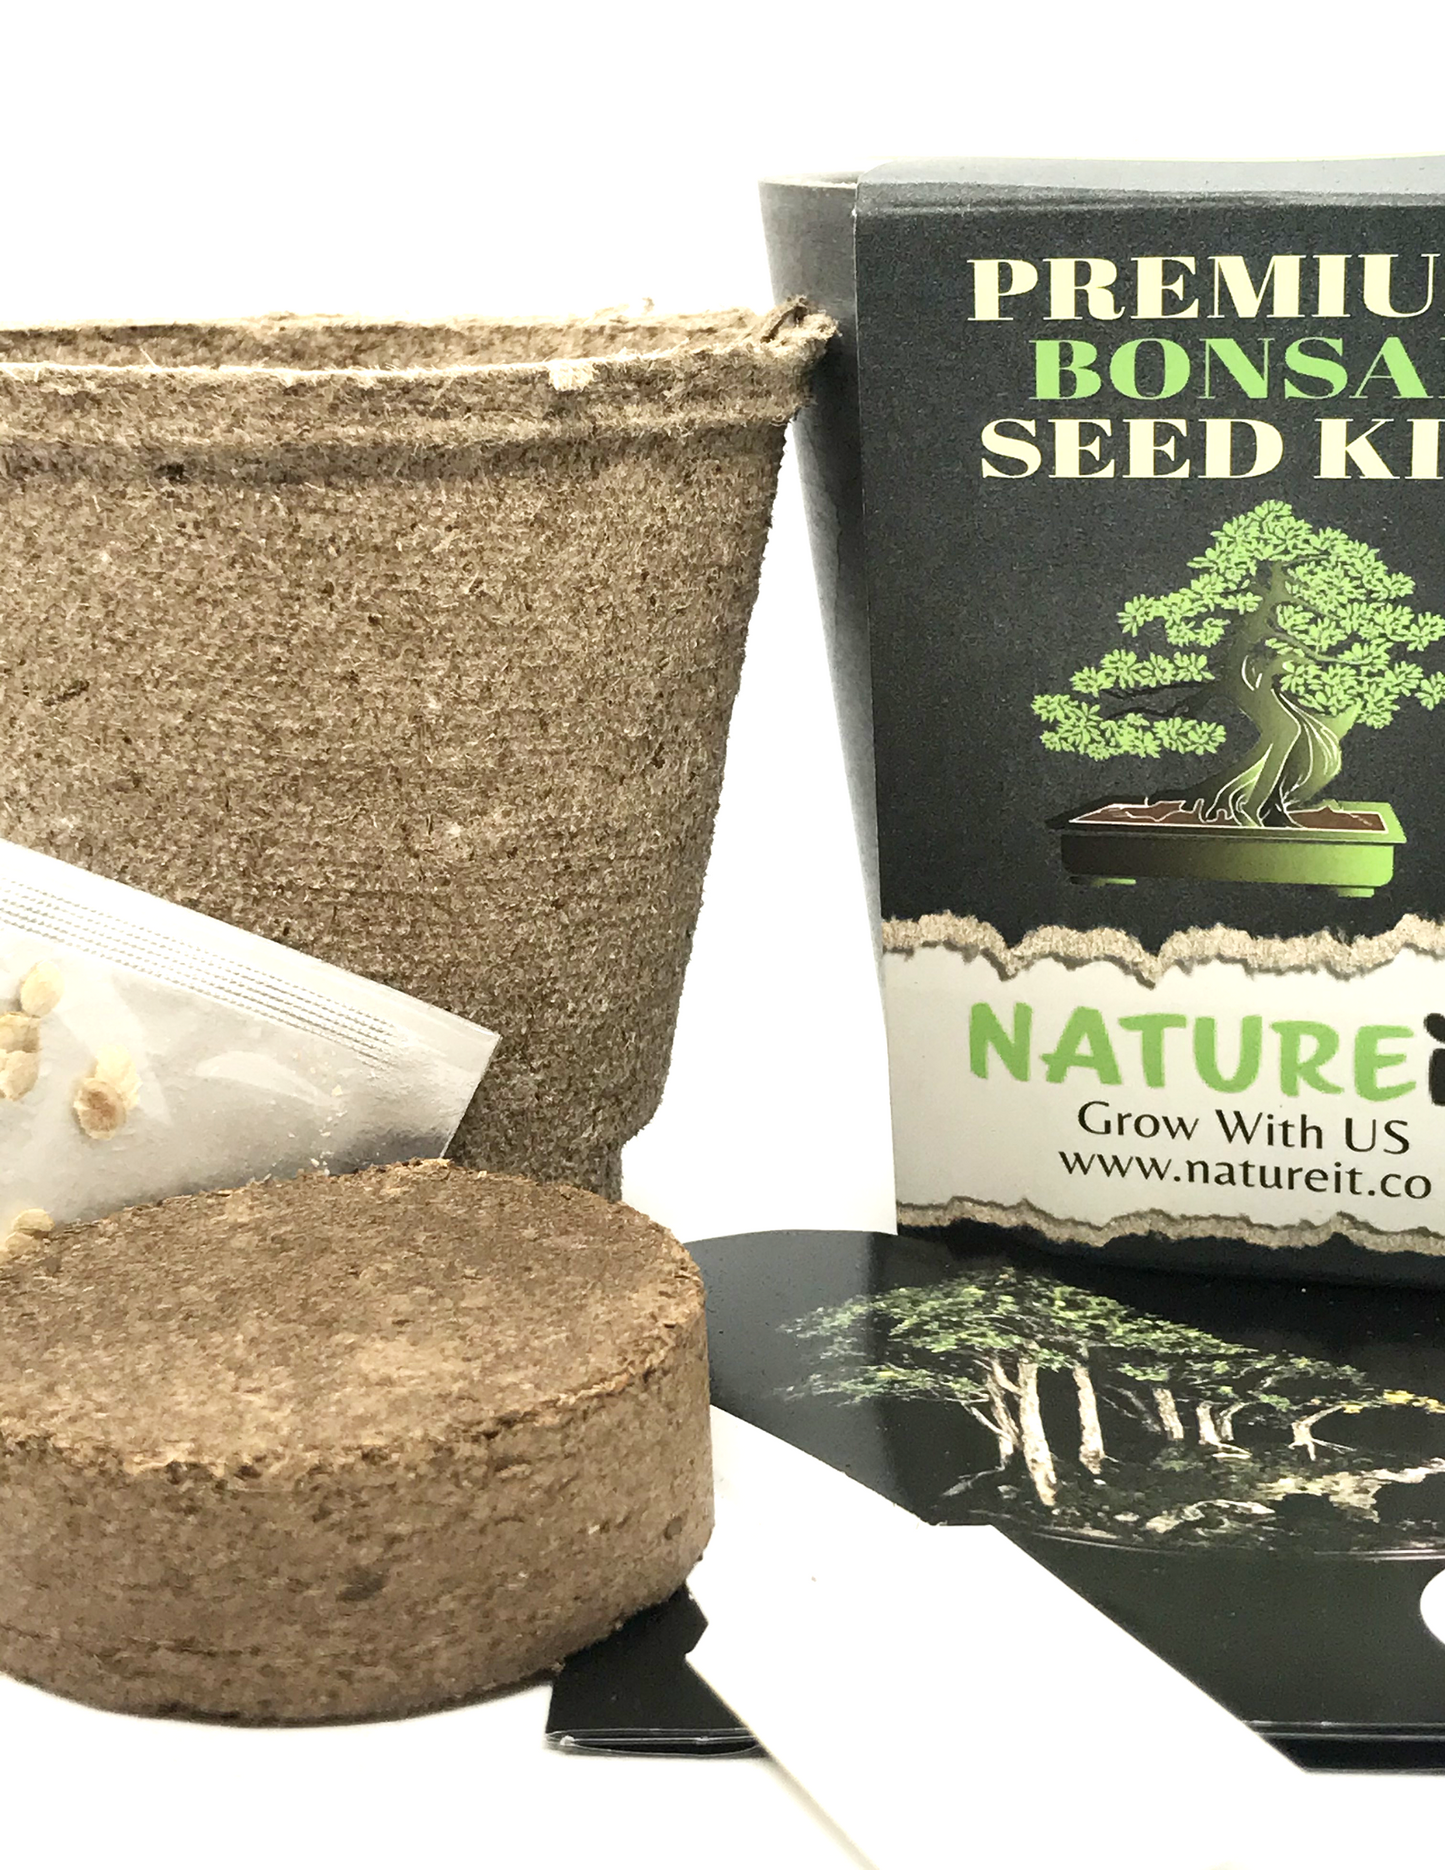 Natureit Premium bonsai seed kit. everything you need to grow a bonsai tree from seed